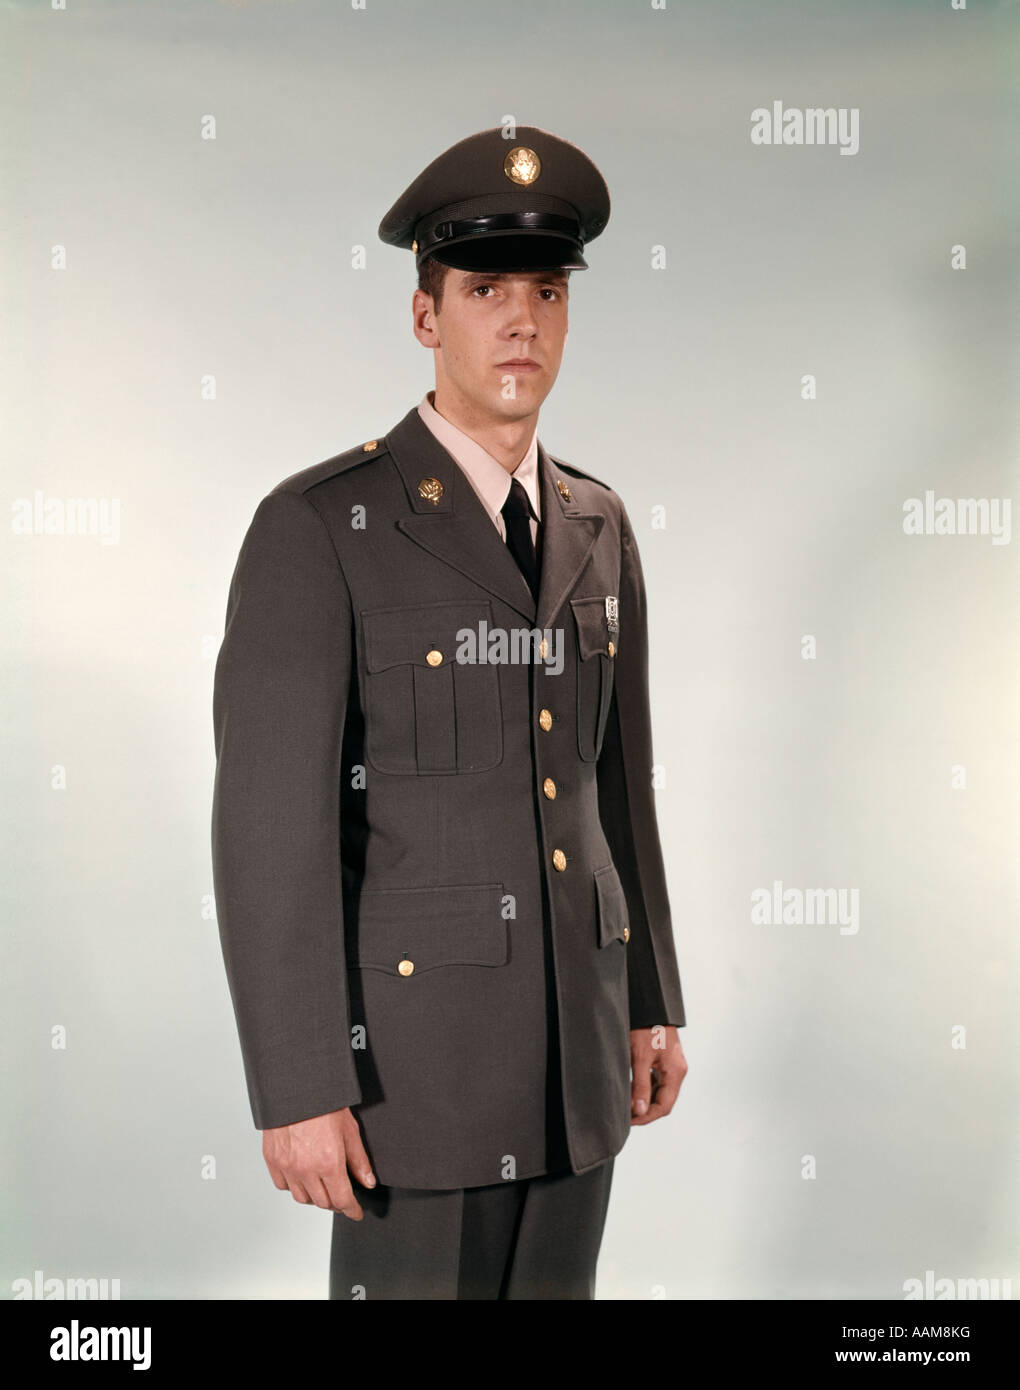 Army National Guard Dress Uniform 87